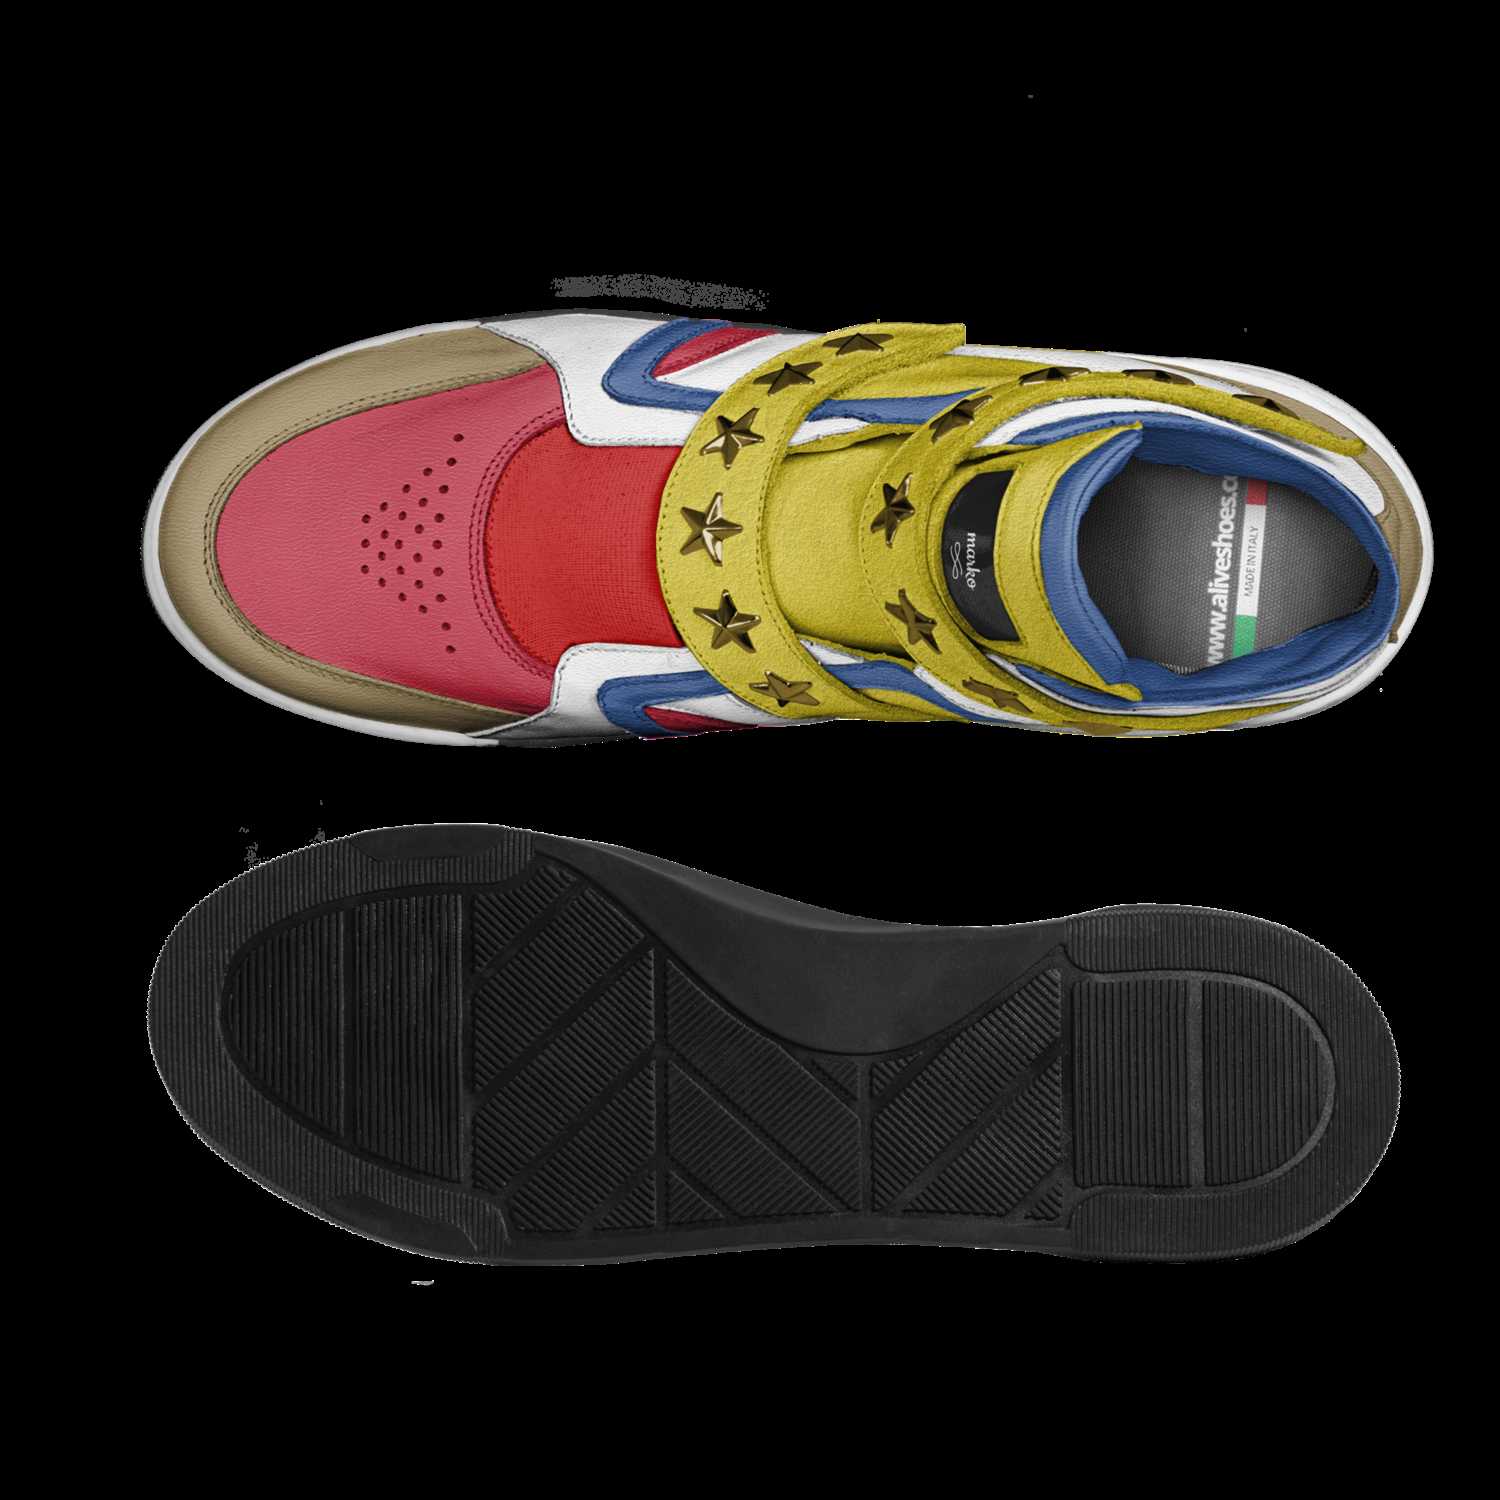 marko | A Custom Shoe concept by Kobiy